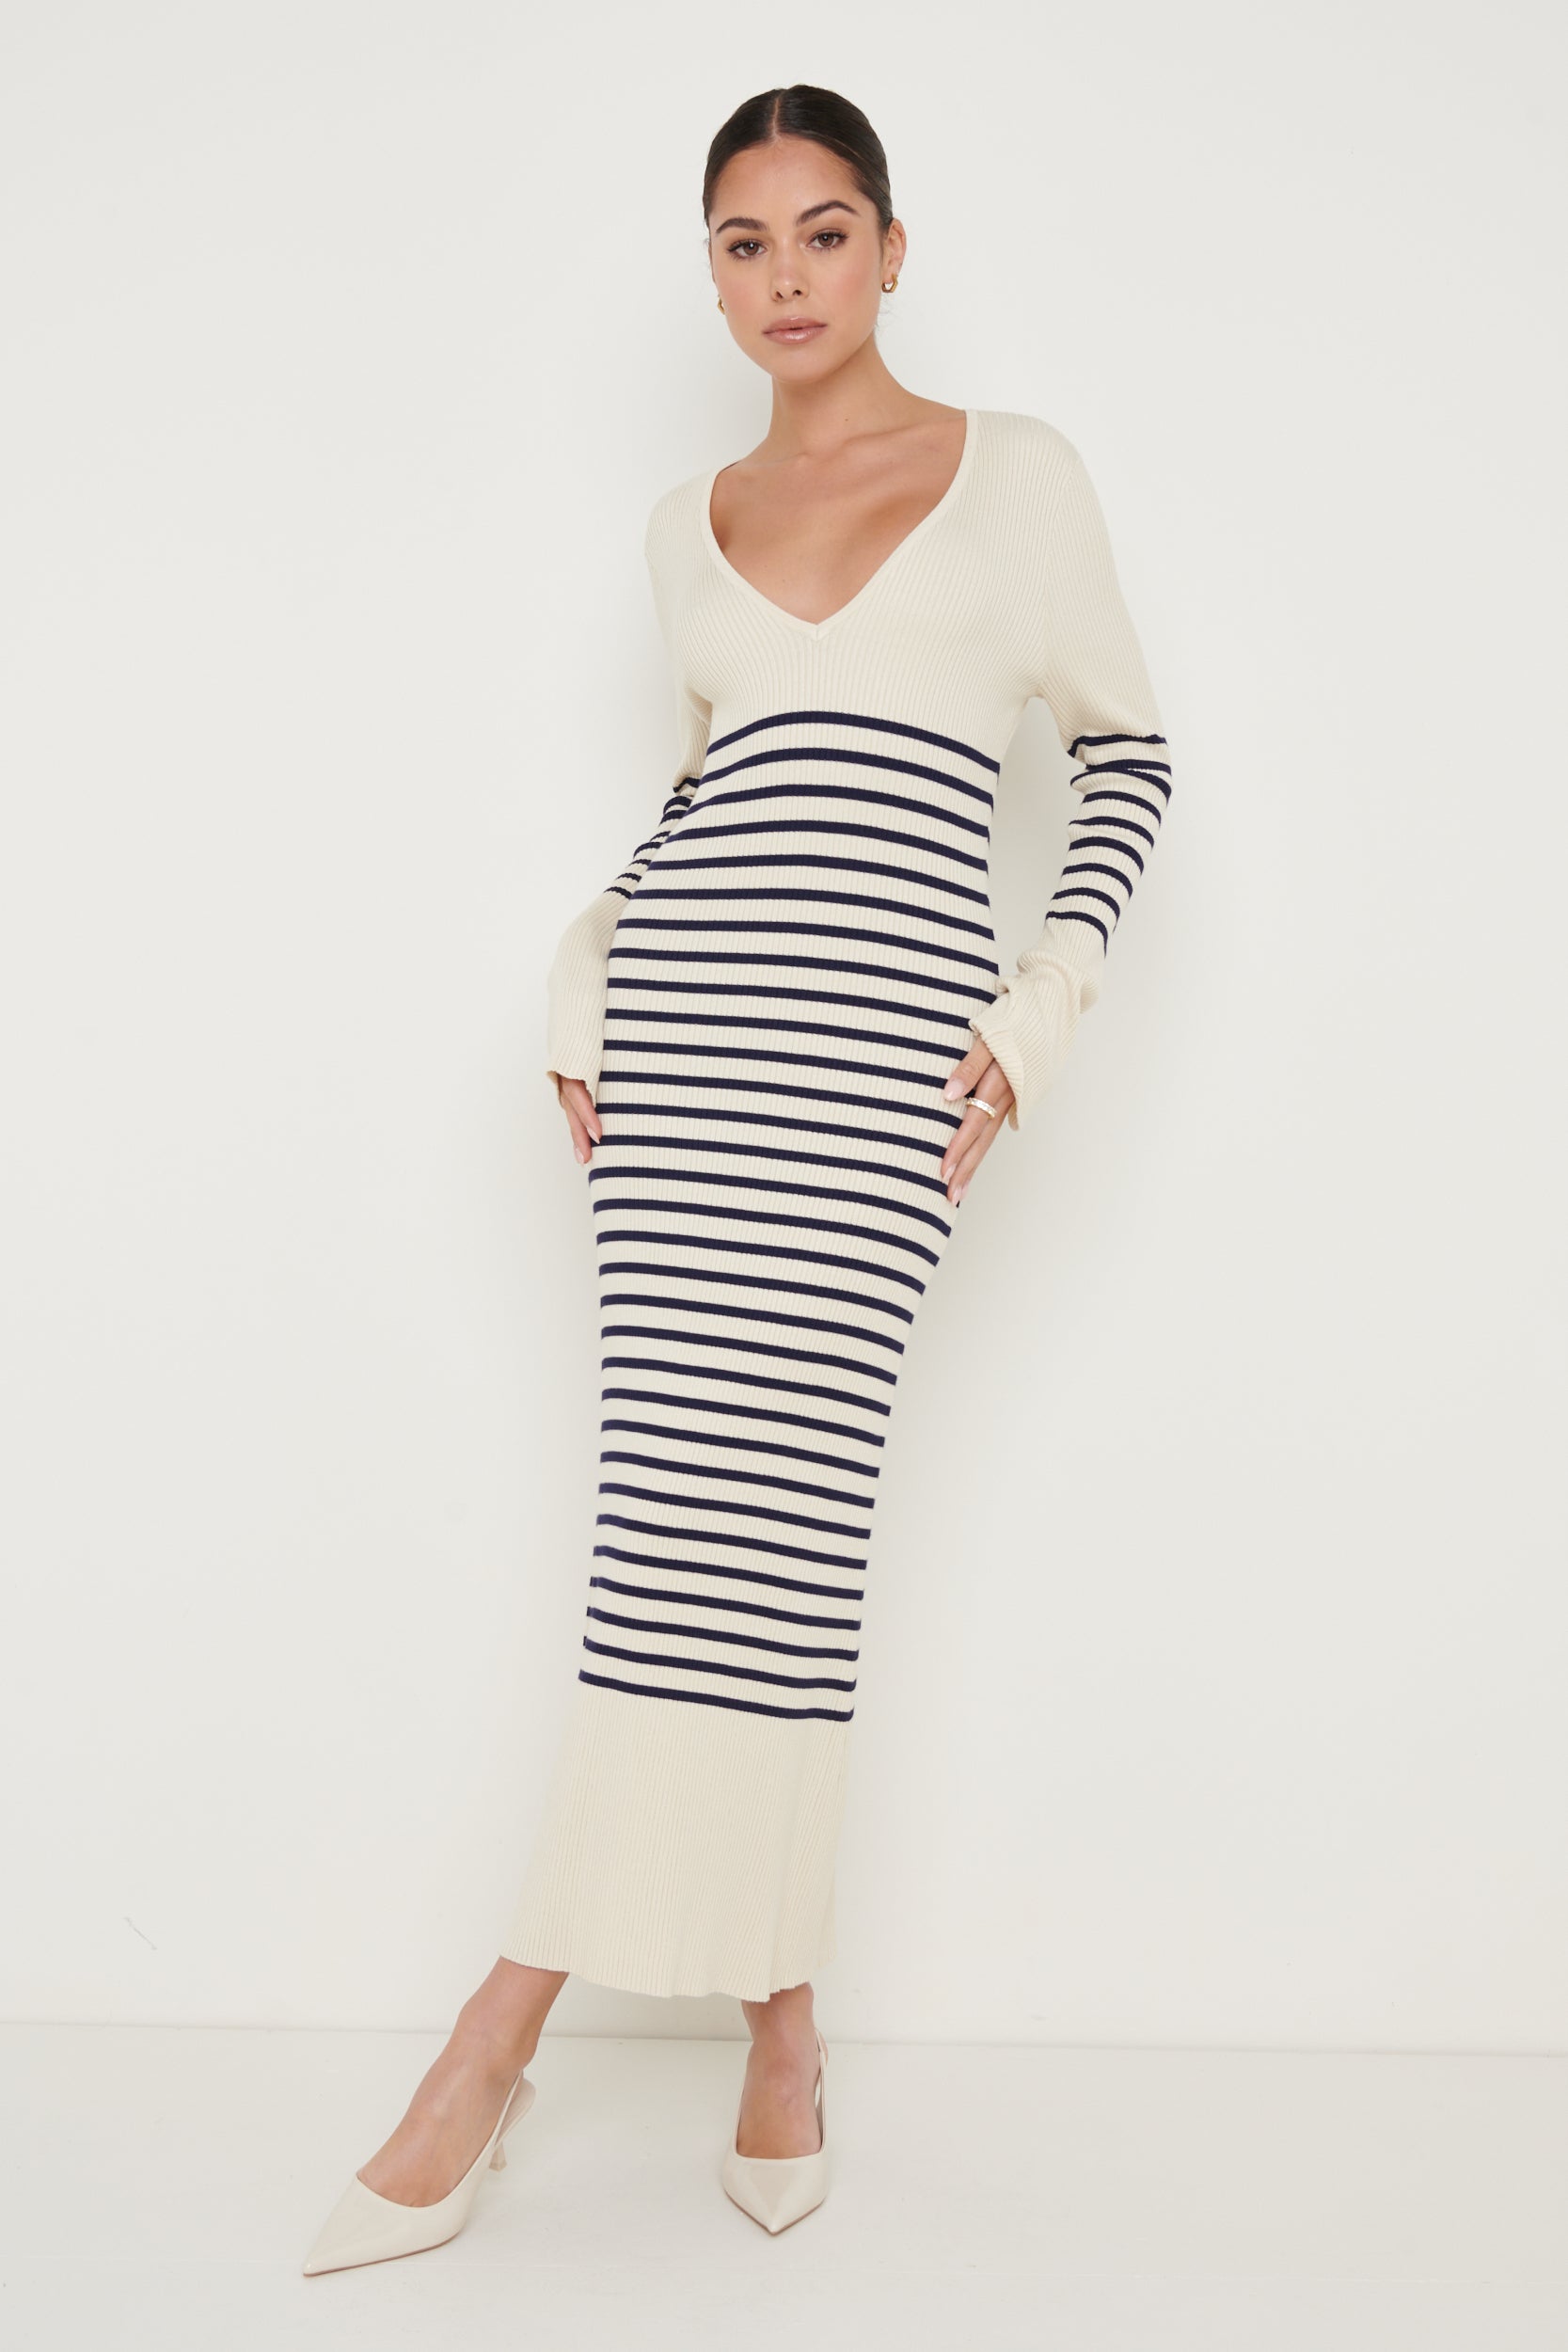 Vanessa Striped Knit Dress - Cream and Blue, S